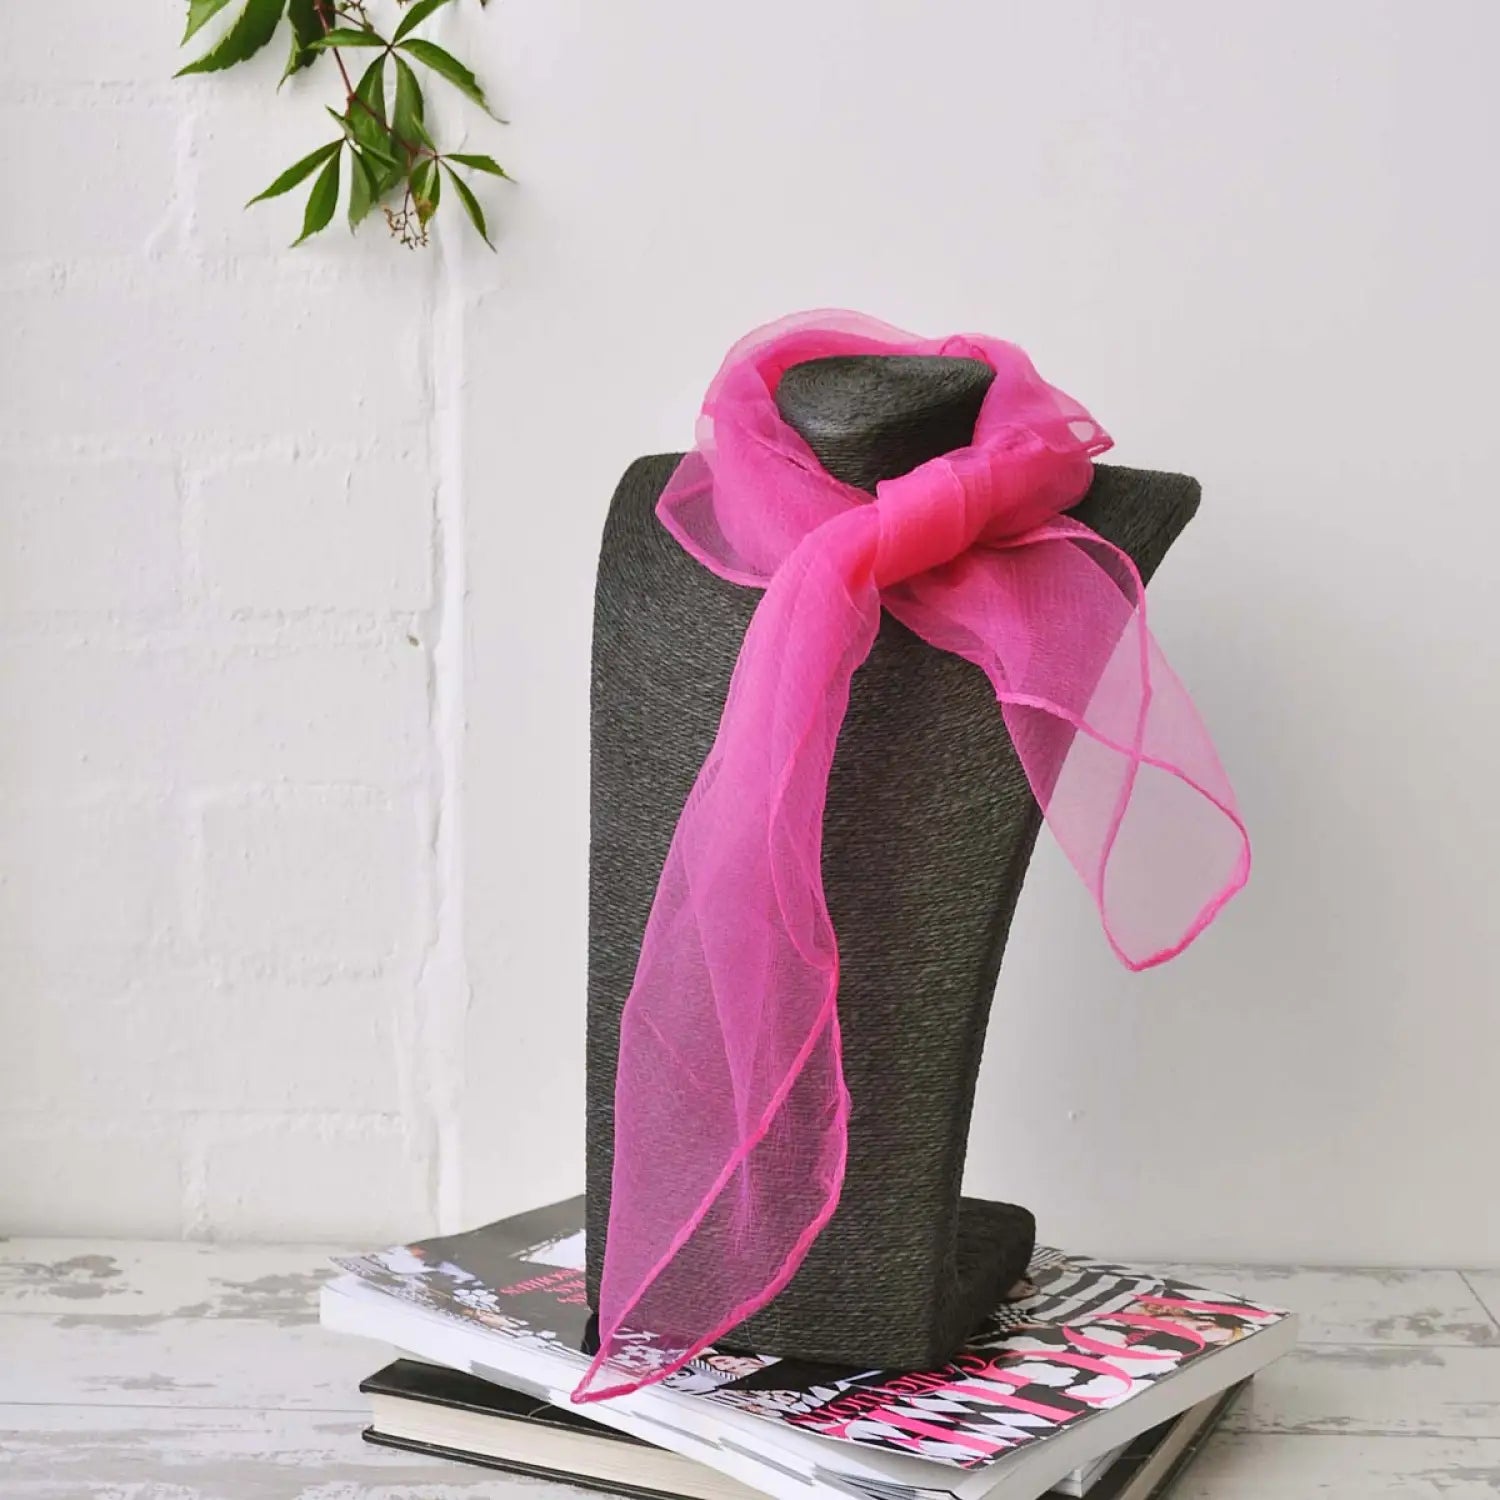 Pink chiffon square scarf tied to grey hat, stylish retro organza accessory